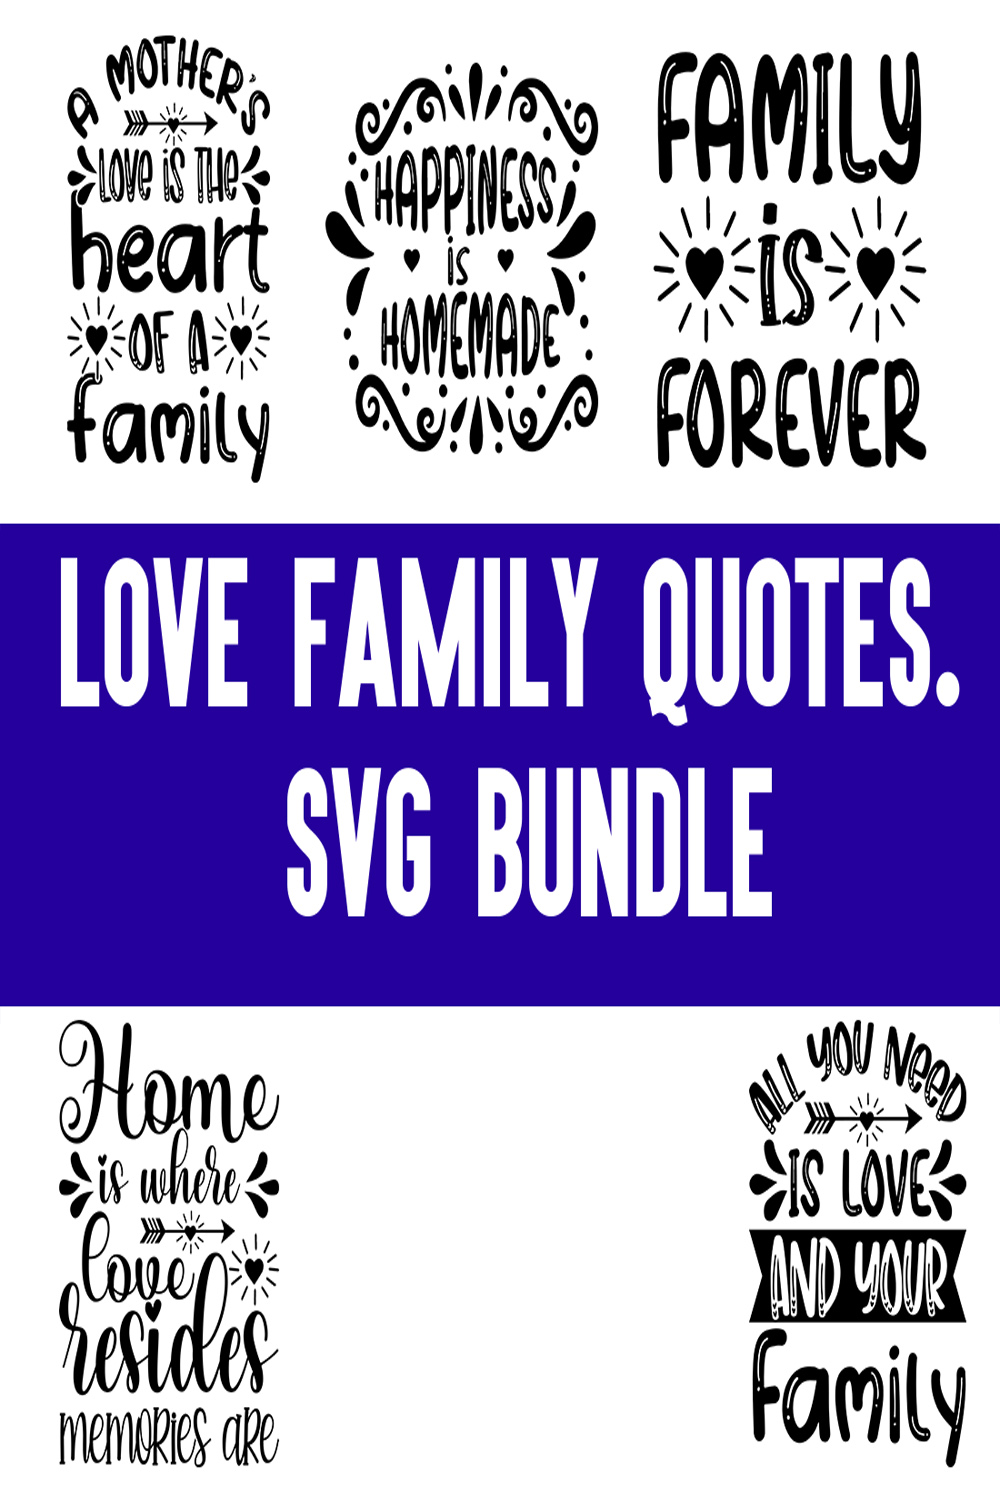 LOVE FAMILY QUOTES SVG BUNDLE pinterest preview image.